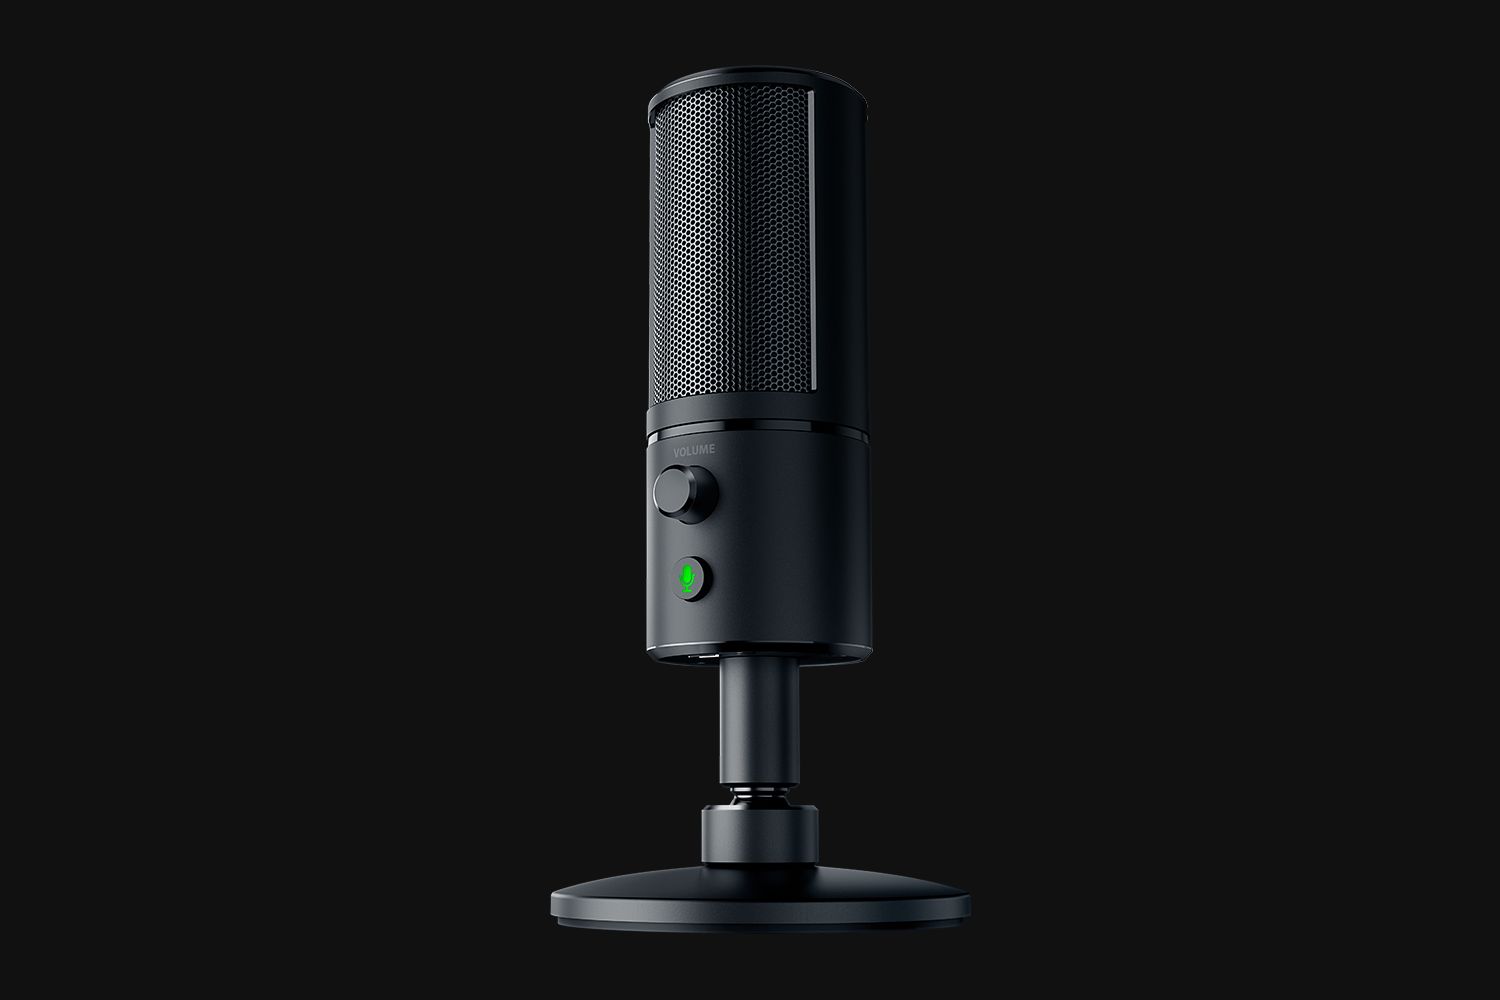 Razer Seiren X Gaming Microphone Review - Testing Testing 1, 2, 3